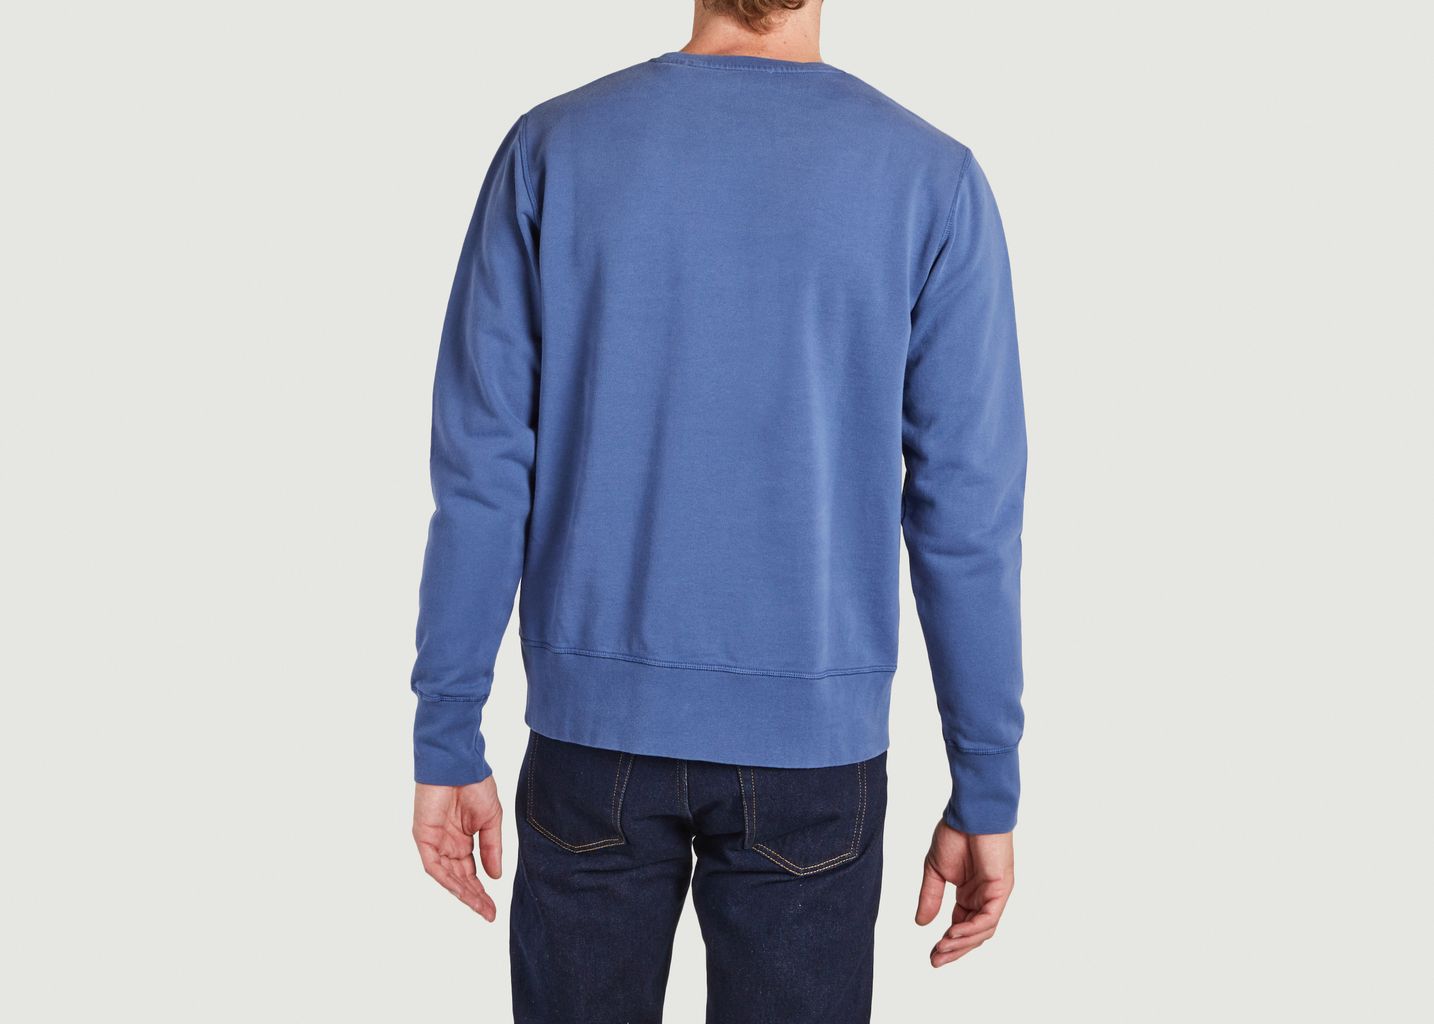 Organic cotton sweatshirt with cross print - Edmmond Studios